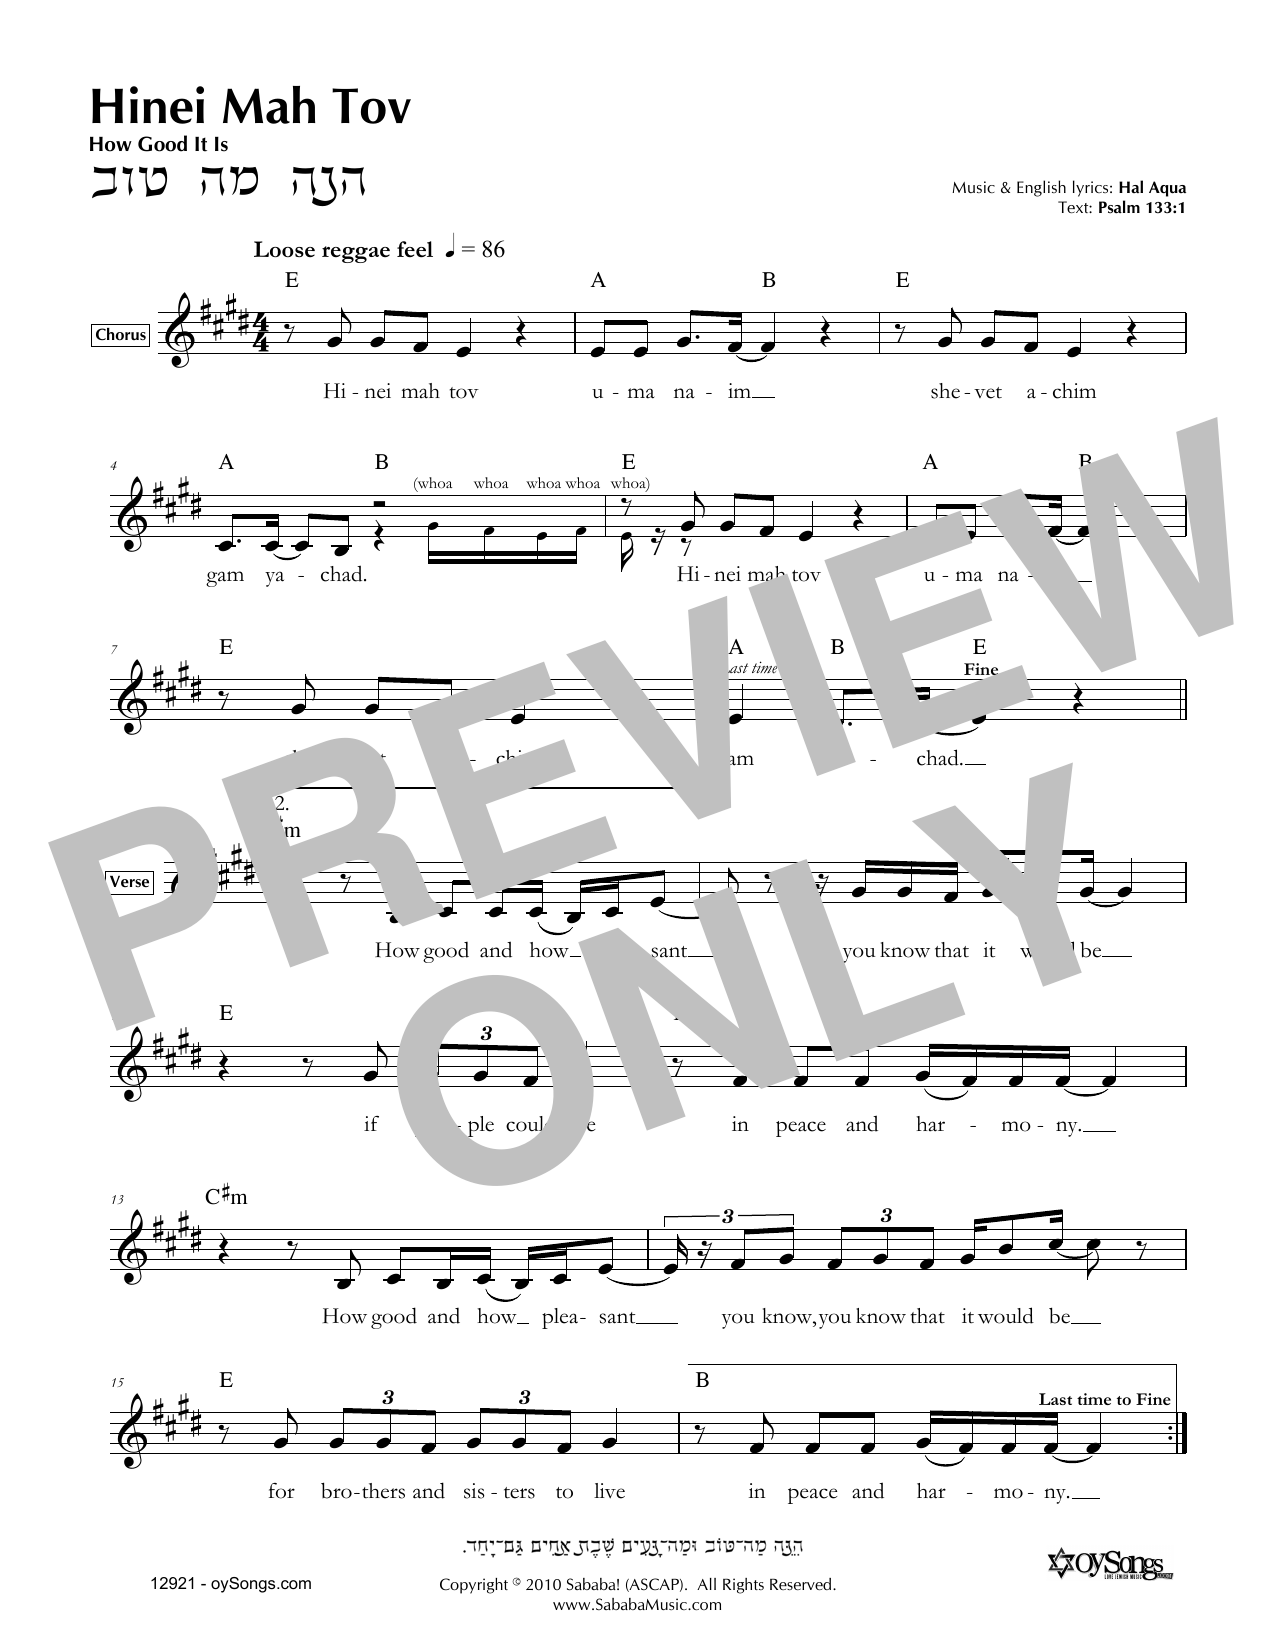 Hal Aqua Hinei Mah Tov sheet music notes and chords arranged for Lead Sheet / Fake Book